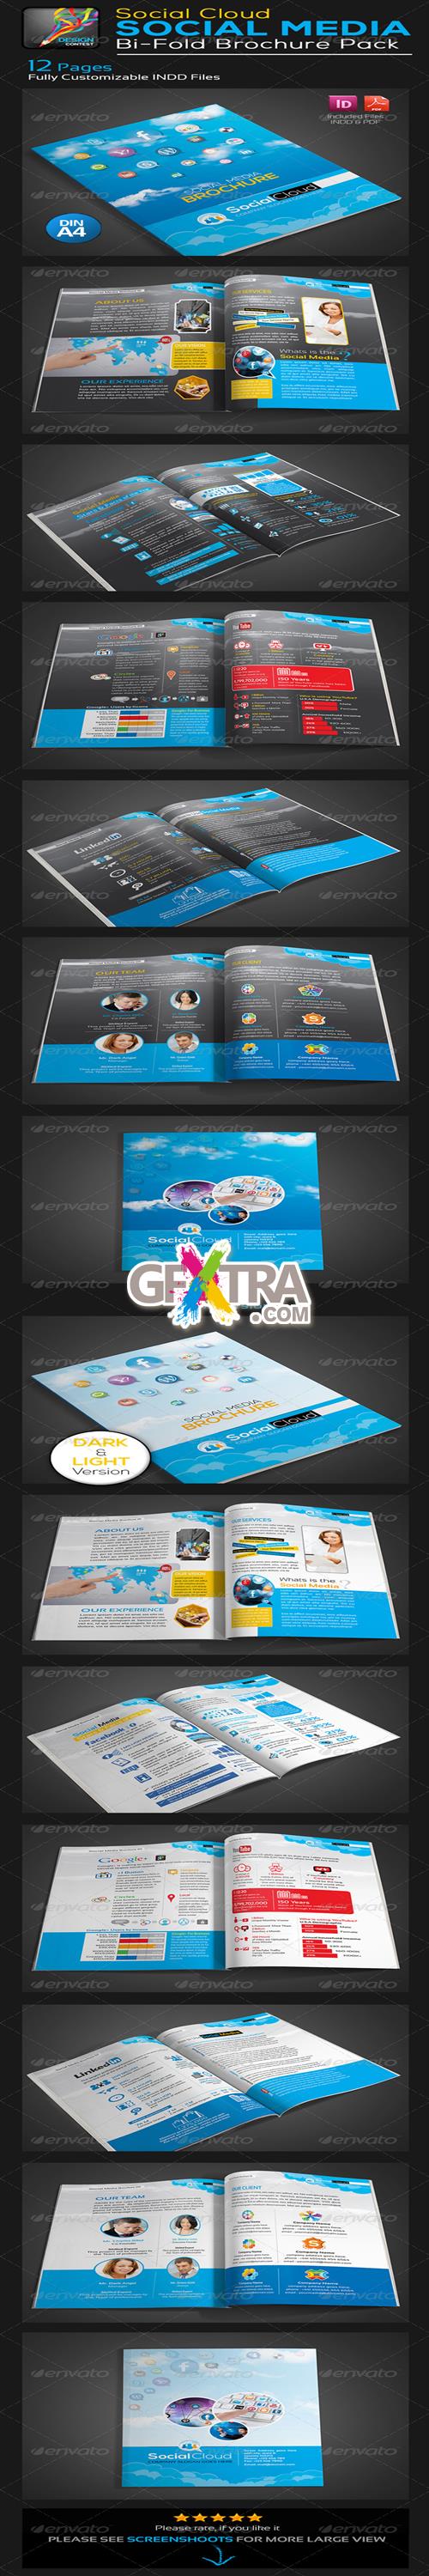 GraphicRiver - Social Cloud : Social Media 12 Pages Brochure